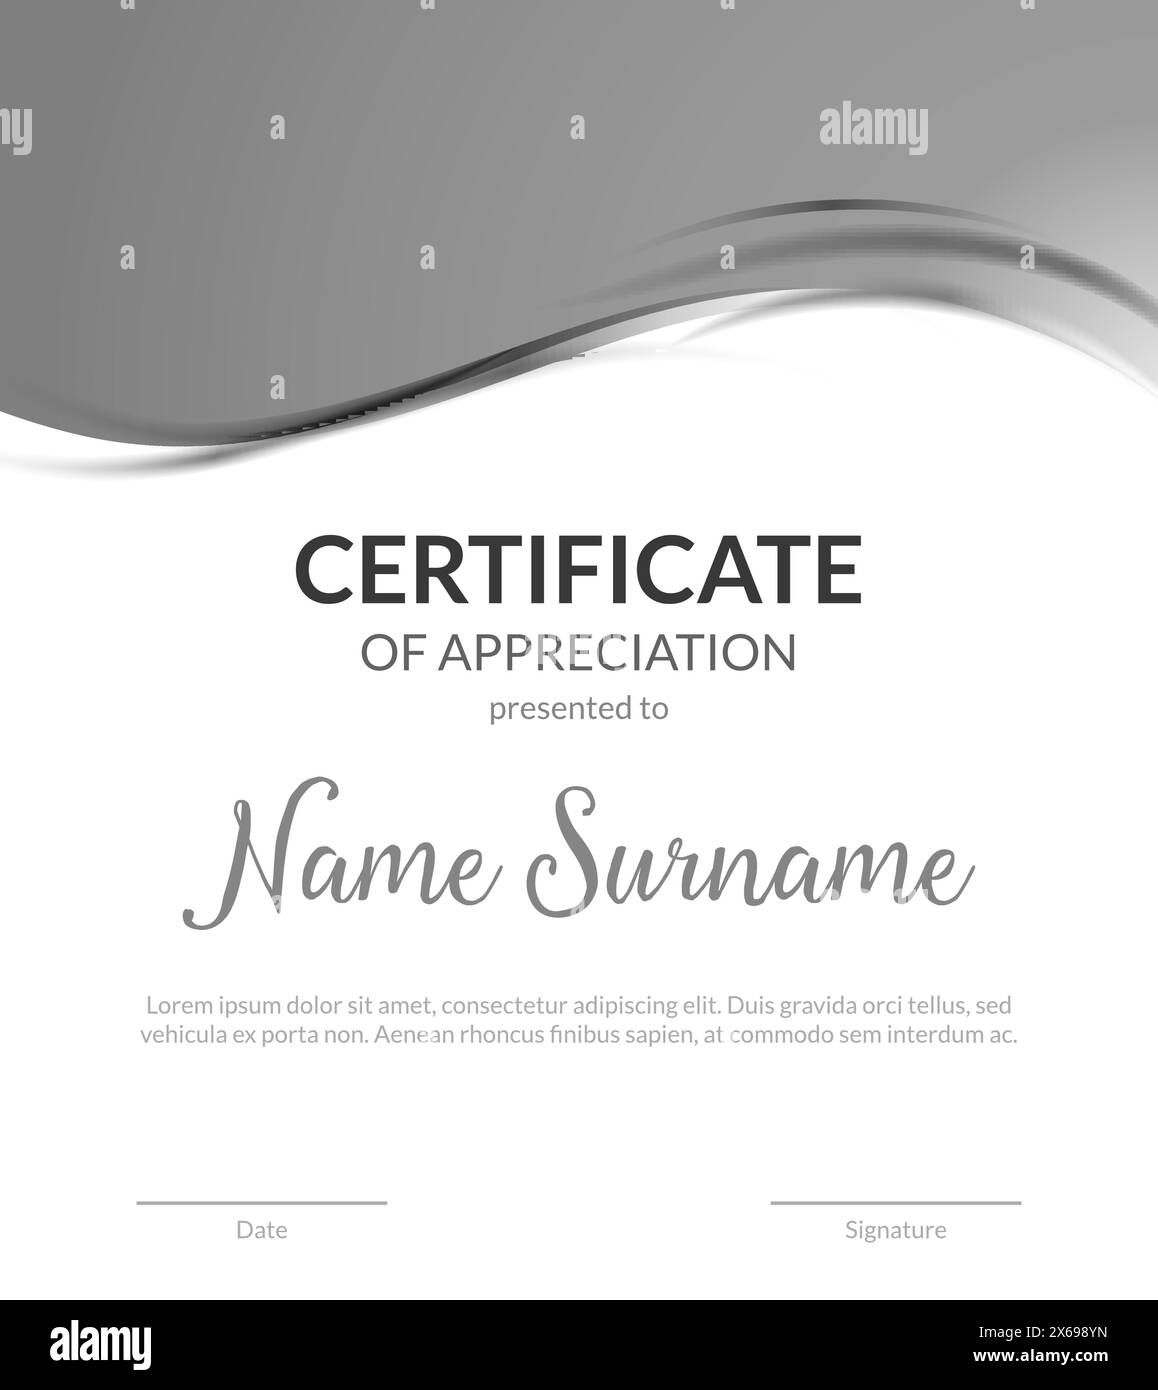 Certificate award diploma template design. Certificate appreciation modern business card award design Stock Vector